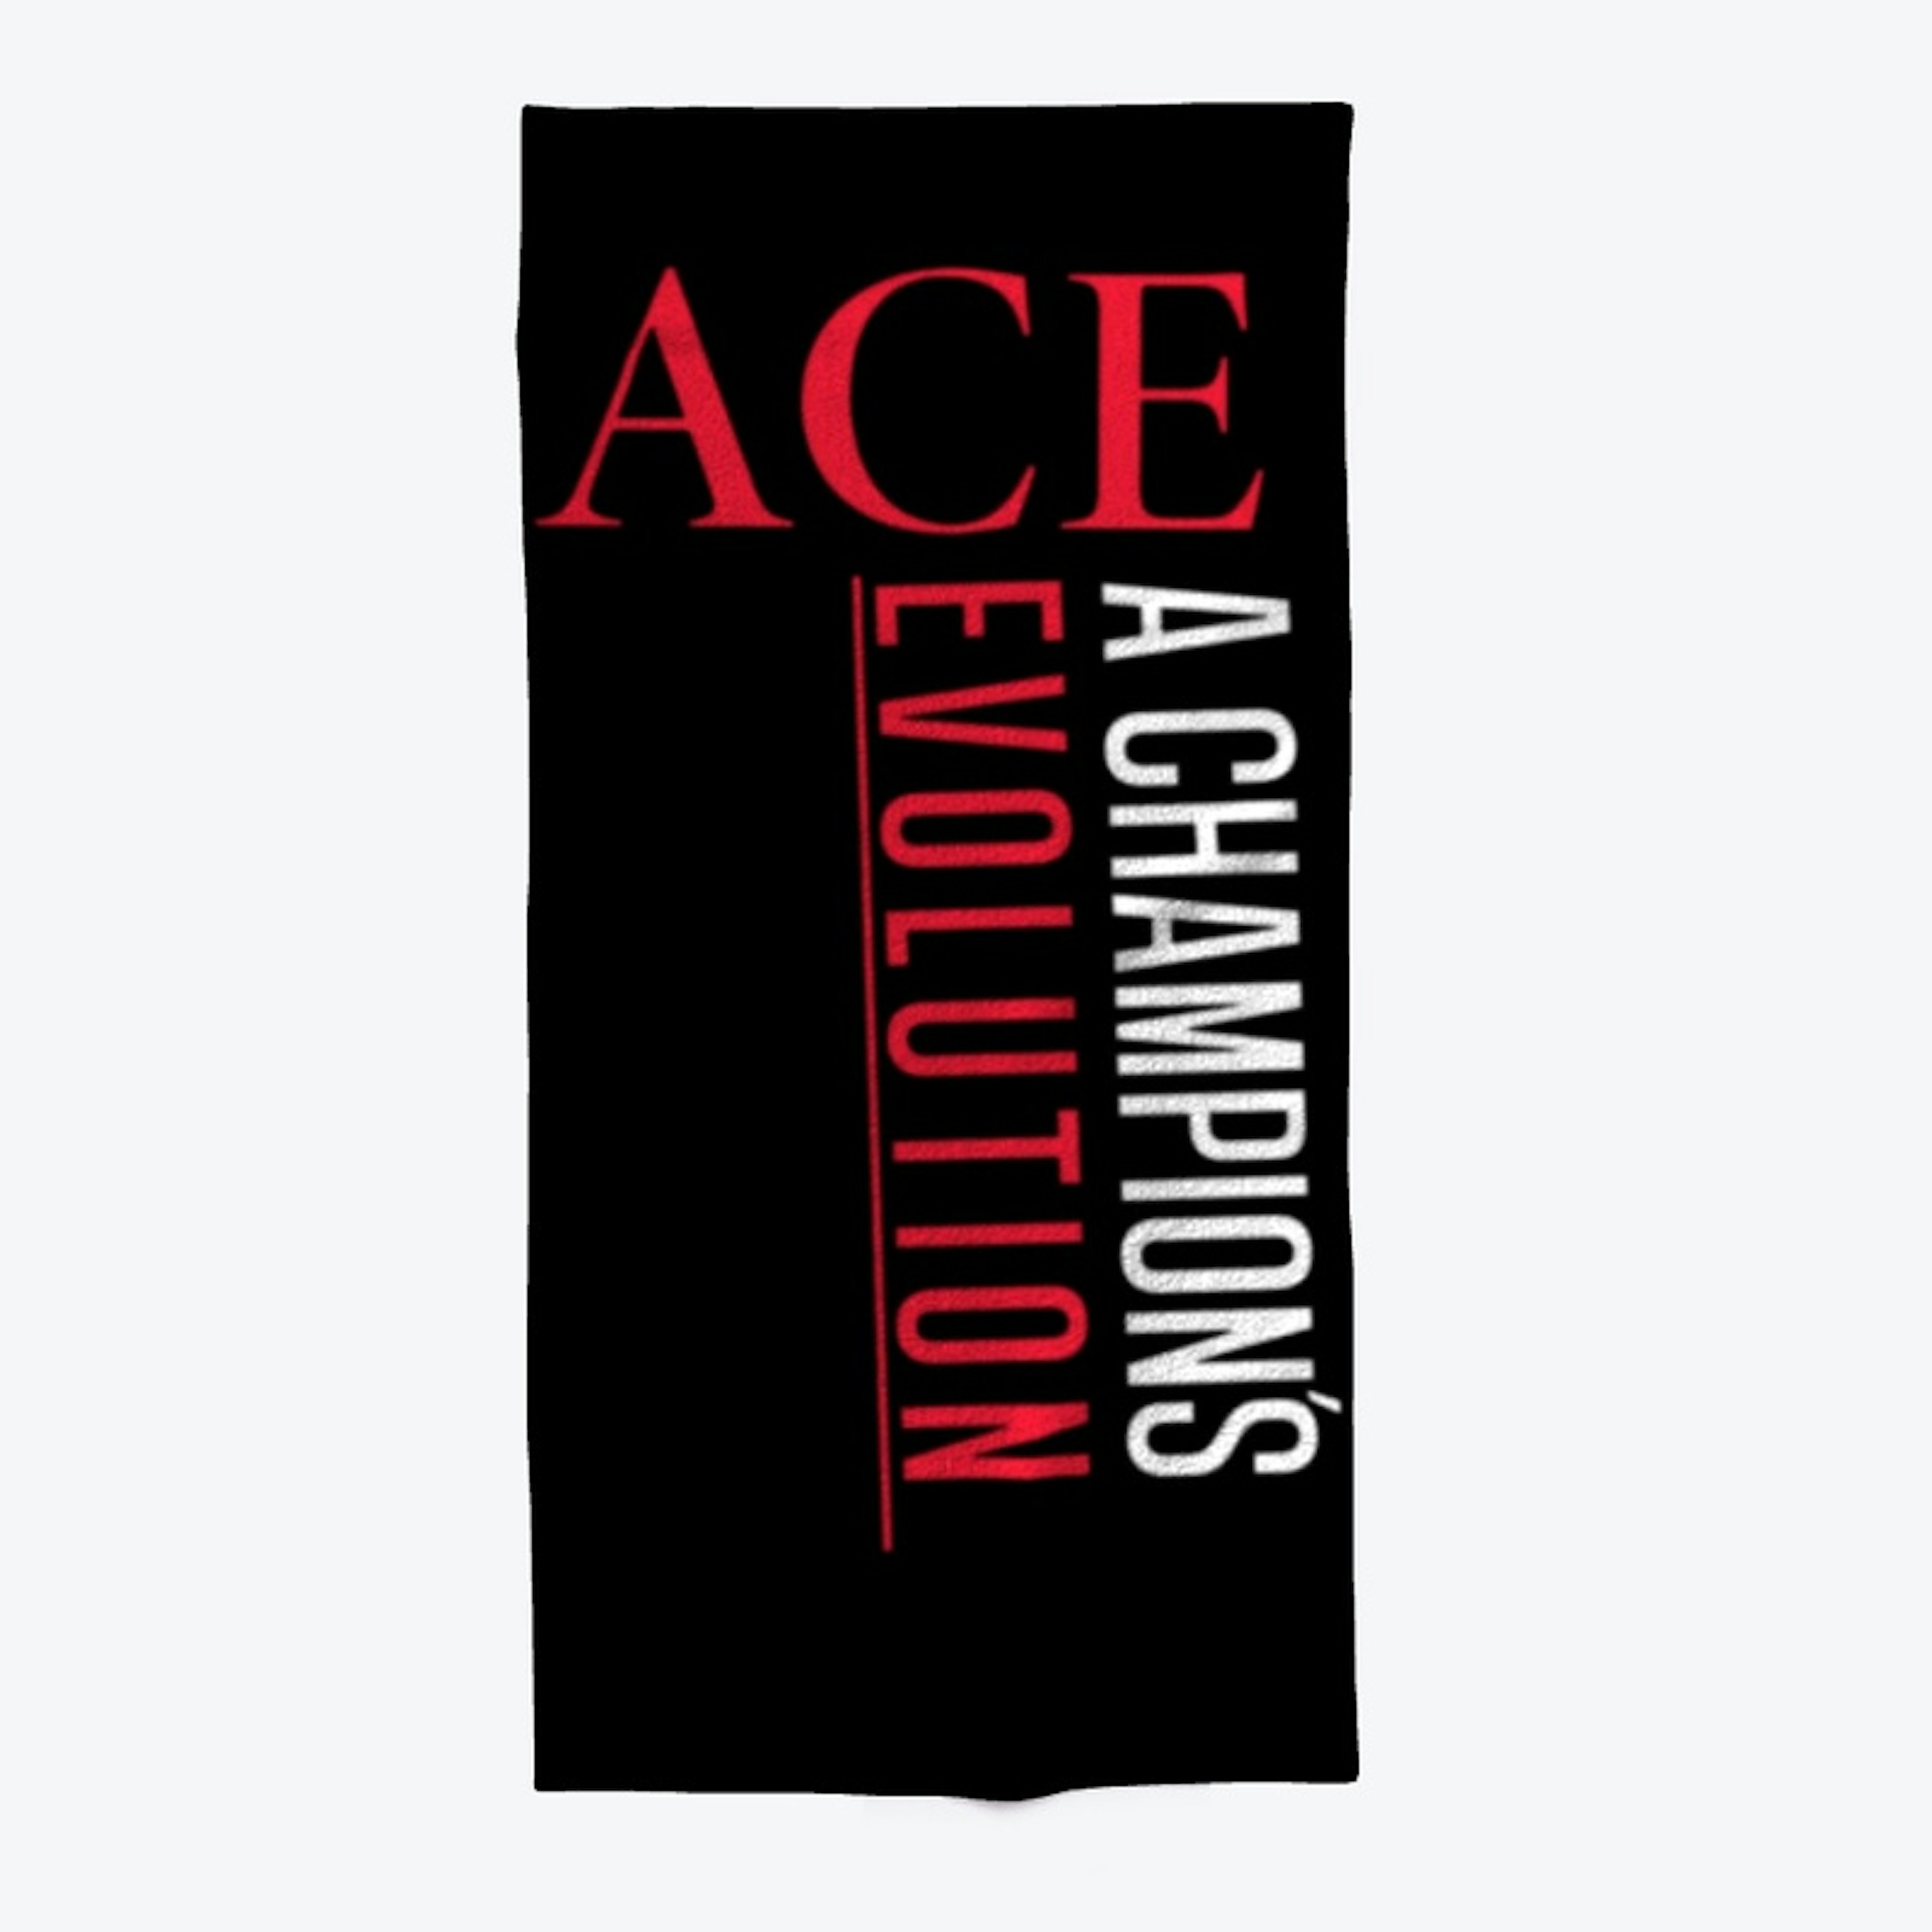 Ace- A Champion's Evolution